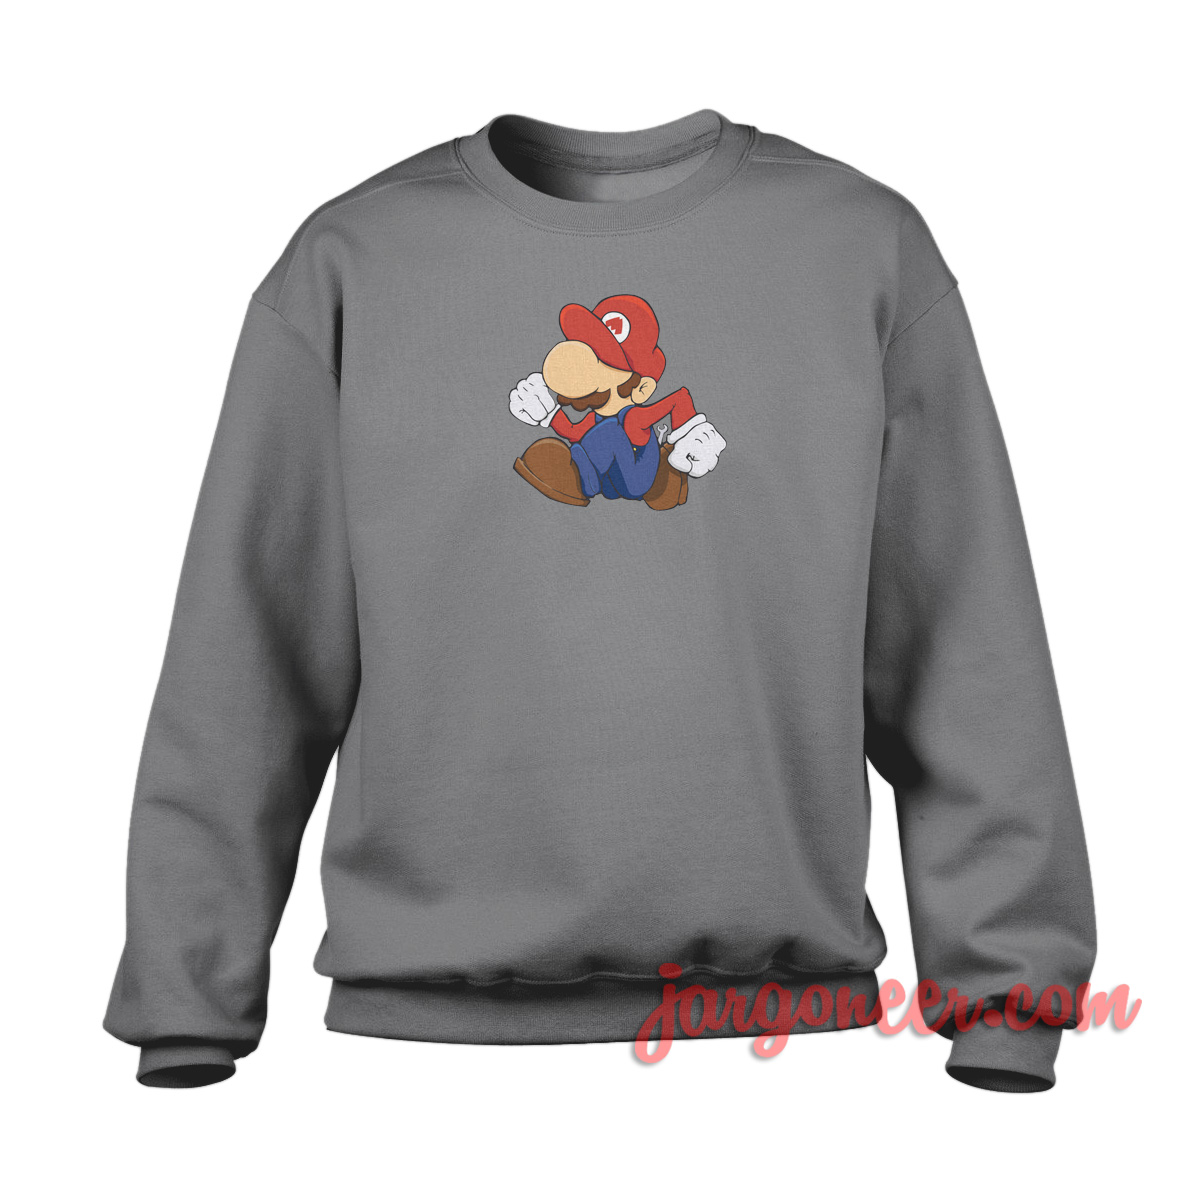 Mario Dope - Shop Unique Graphic Cool Shirt Designs